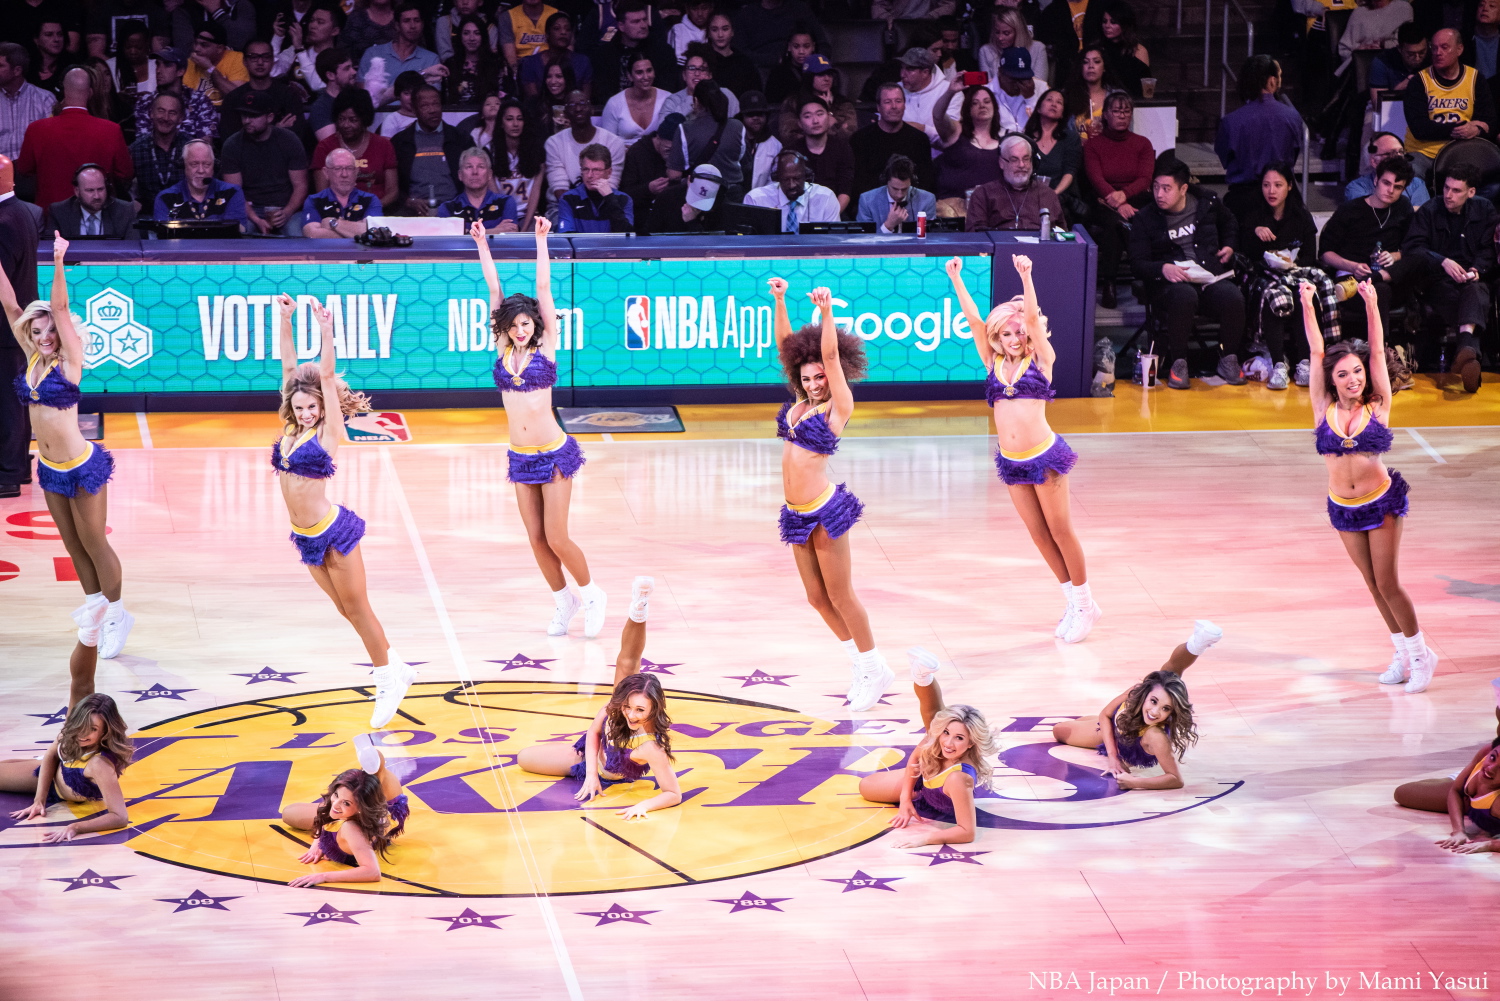 MSP_0196 Thunder vs Lakers, Photo by Mami Yasui/NBA Japan